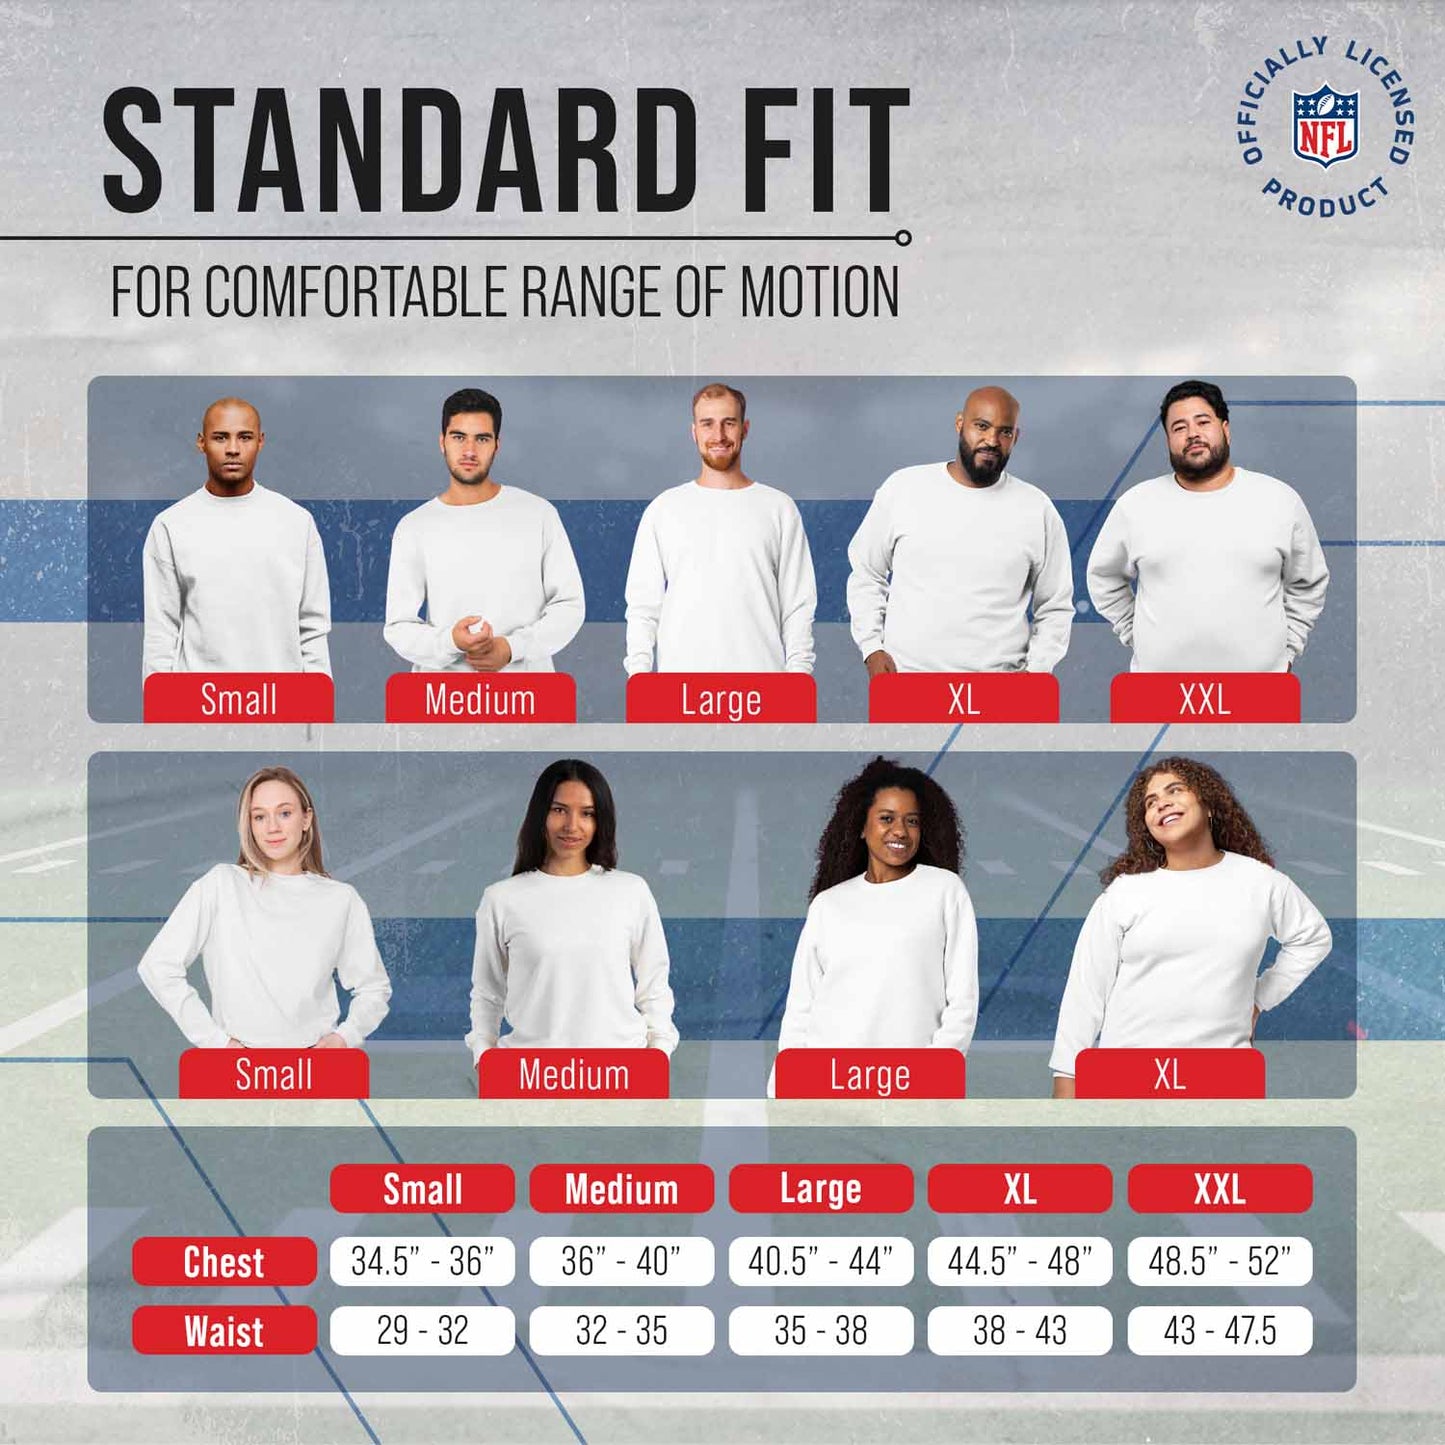 Los Angeles Rams NFL Adult Long Sleeve Team Block Charcoal Crewneck Sweatshirt - Charcoal